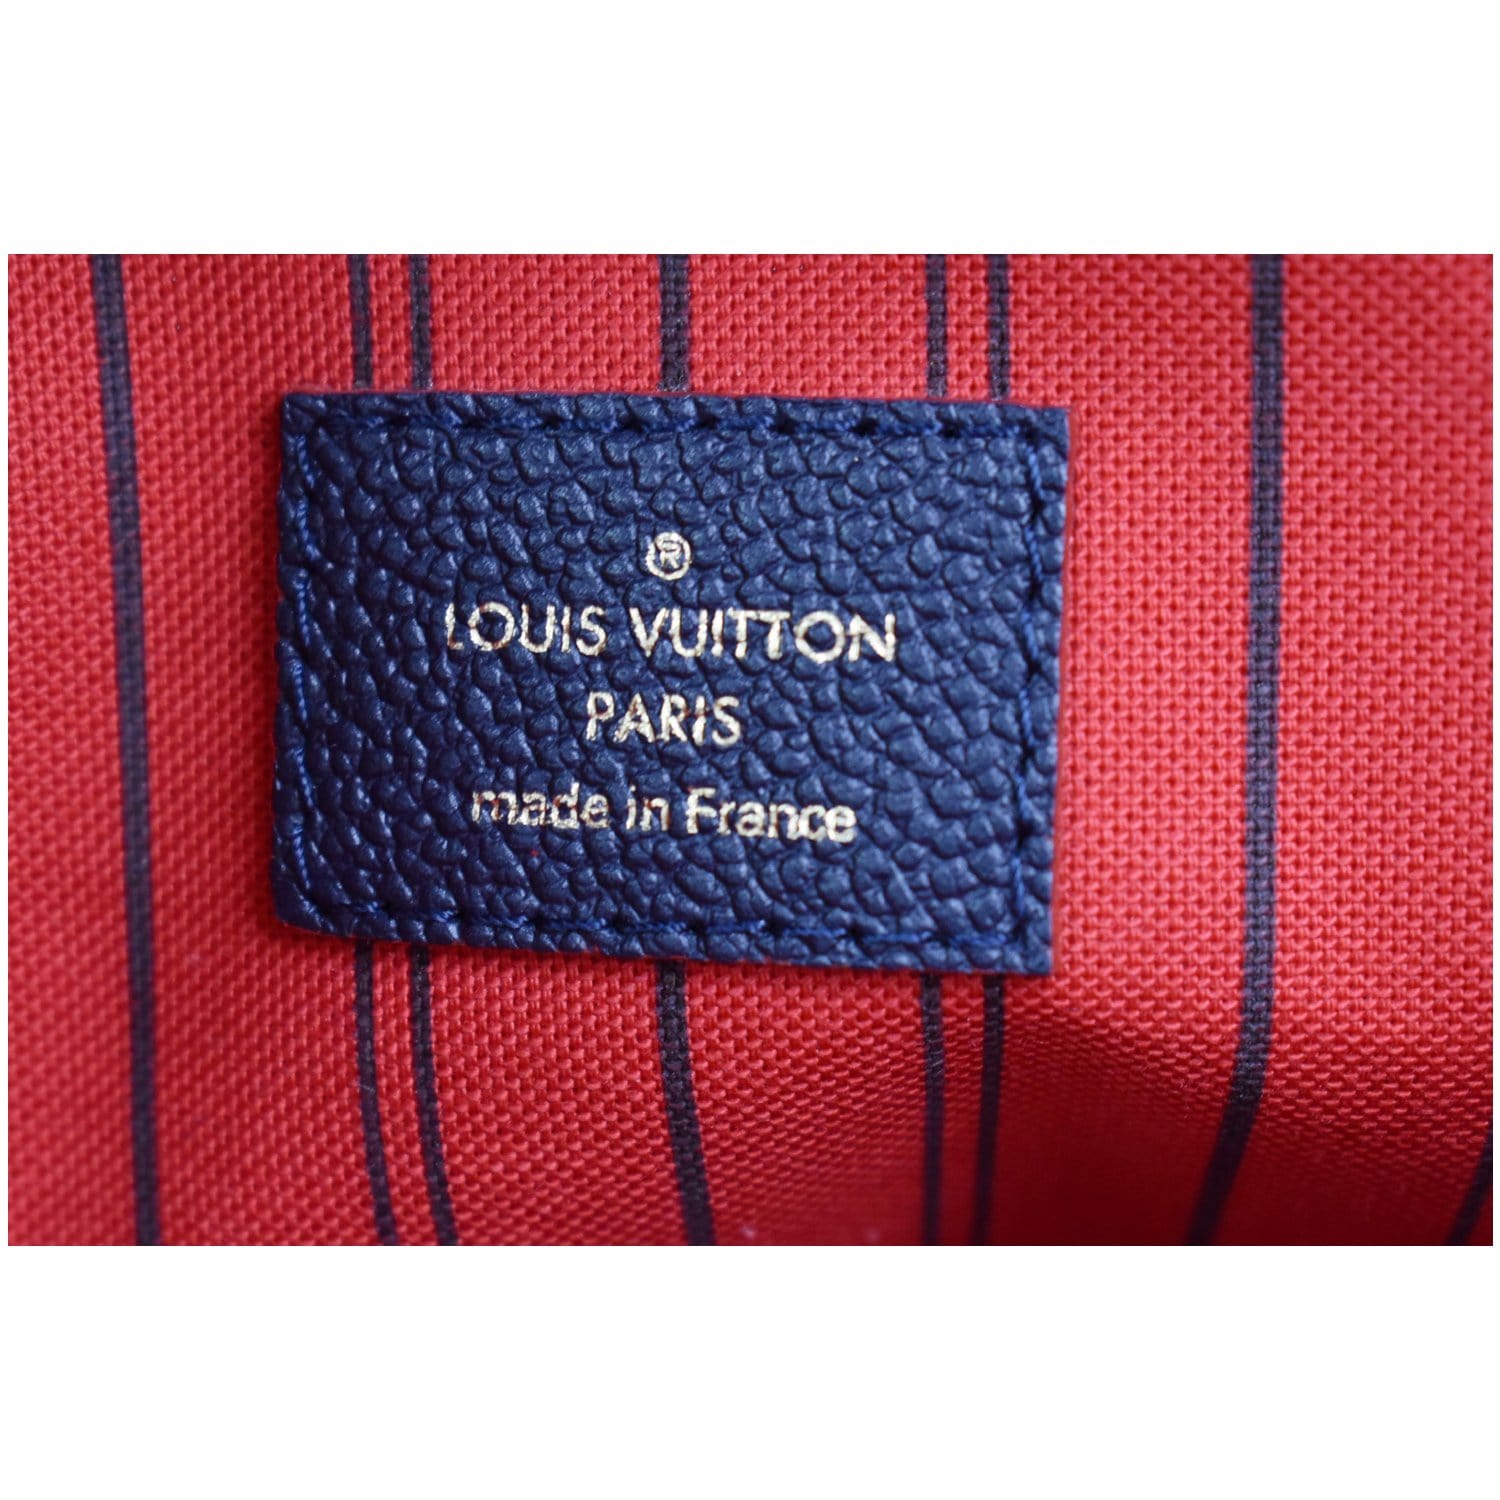 Pochette Métis - Luxury Monogram Empreinte Leather Blue